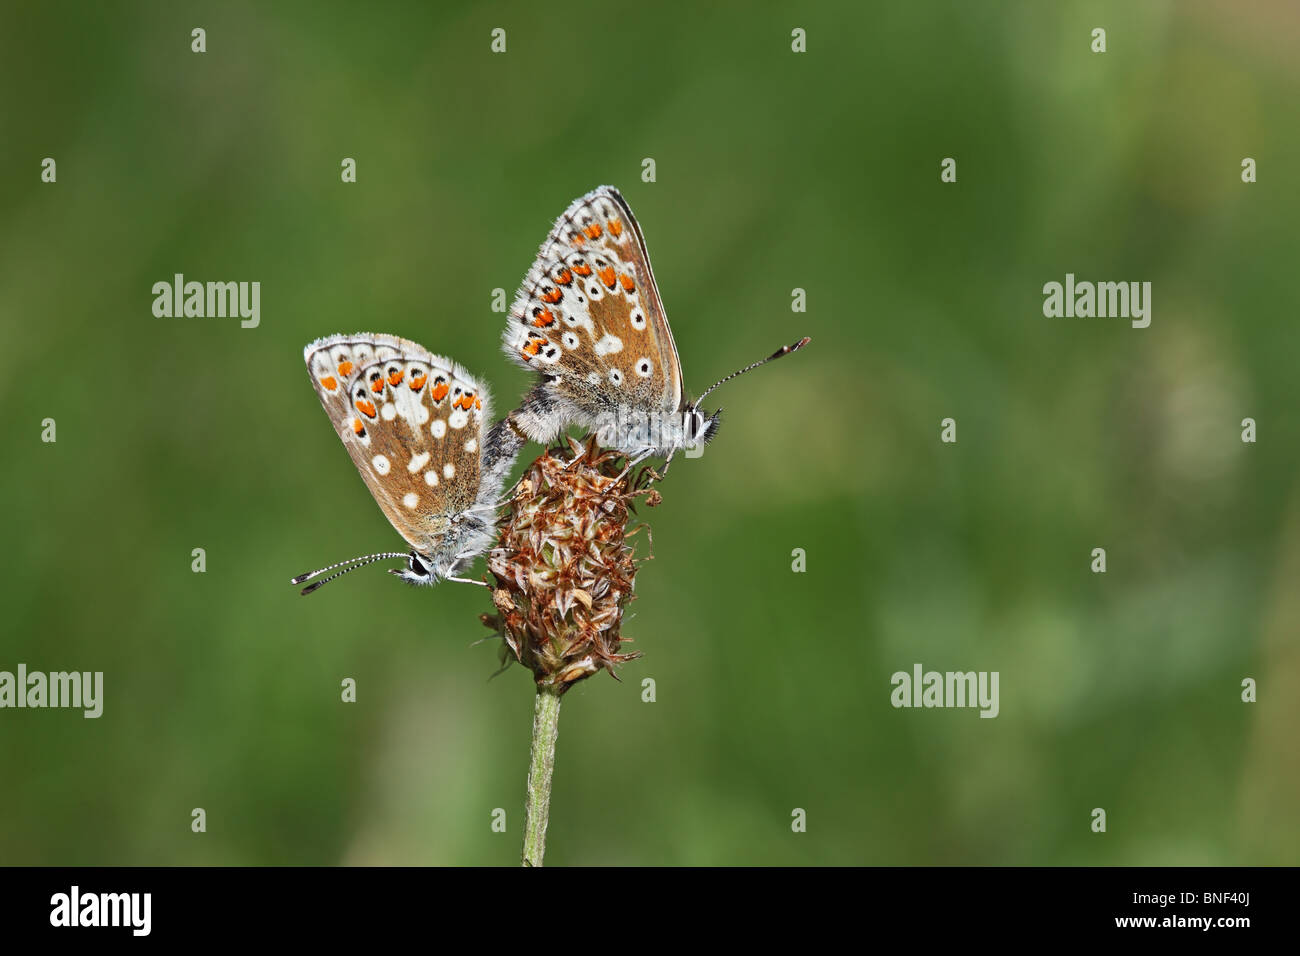 Maschio e femmina Durham Argus Aricia artaserse salmacis farfalle coniugata North East England Regno Unito Foto Stock